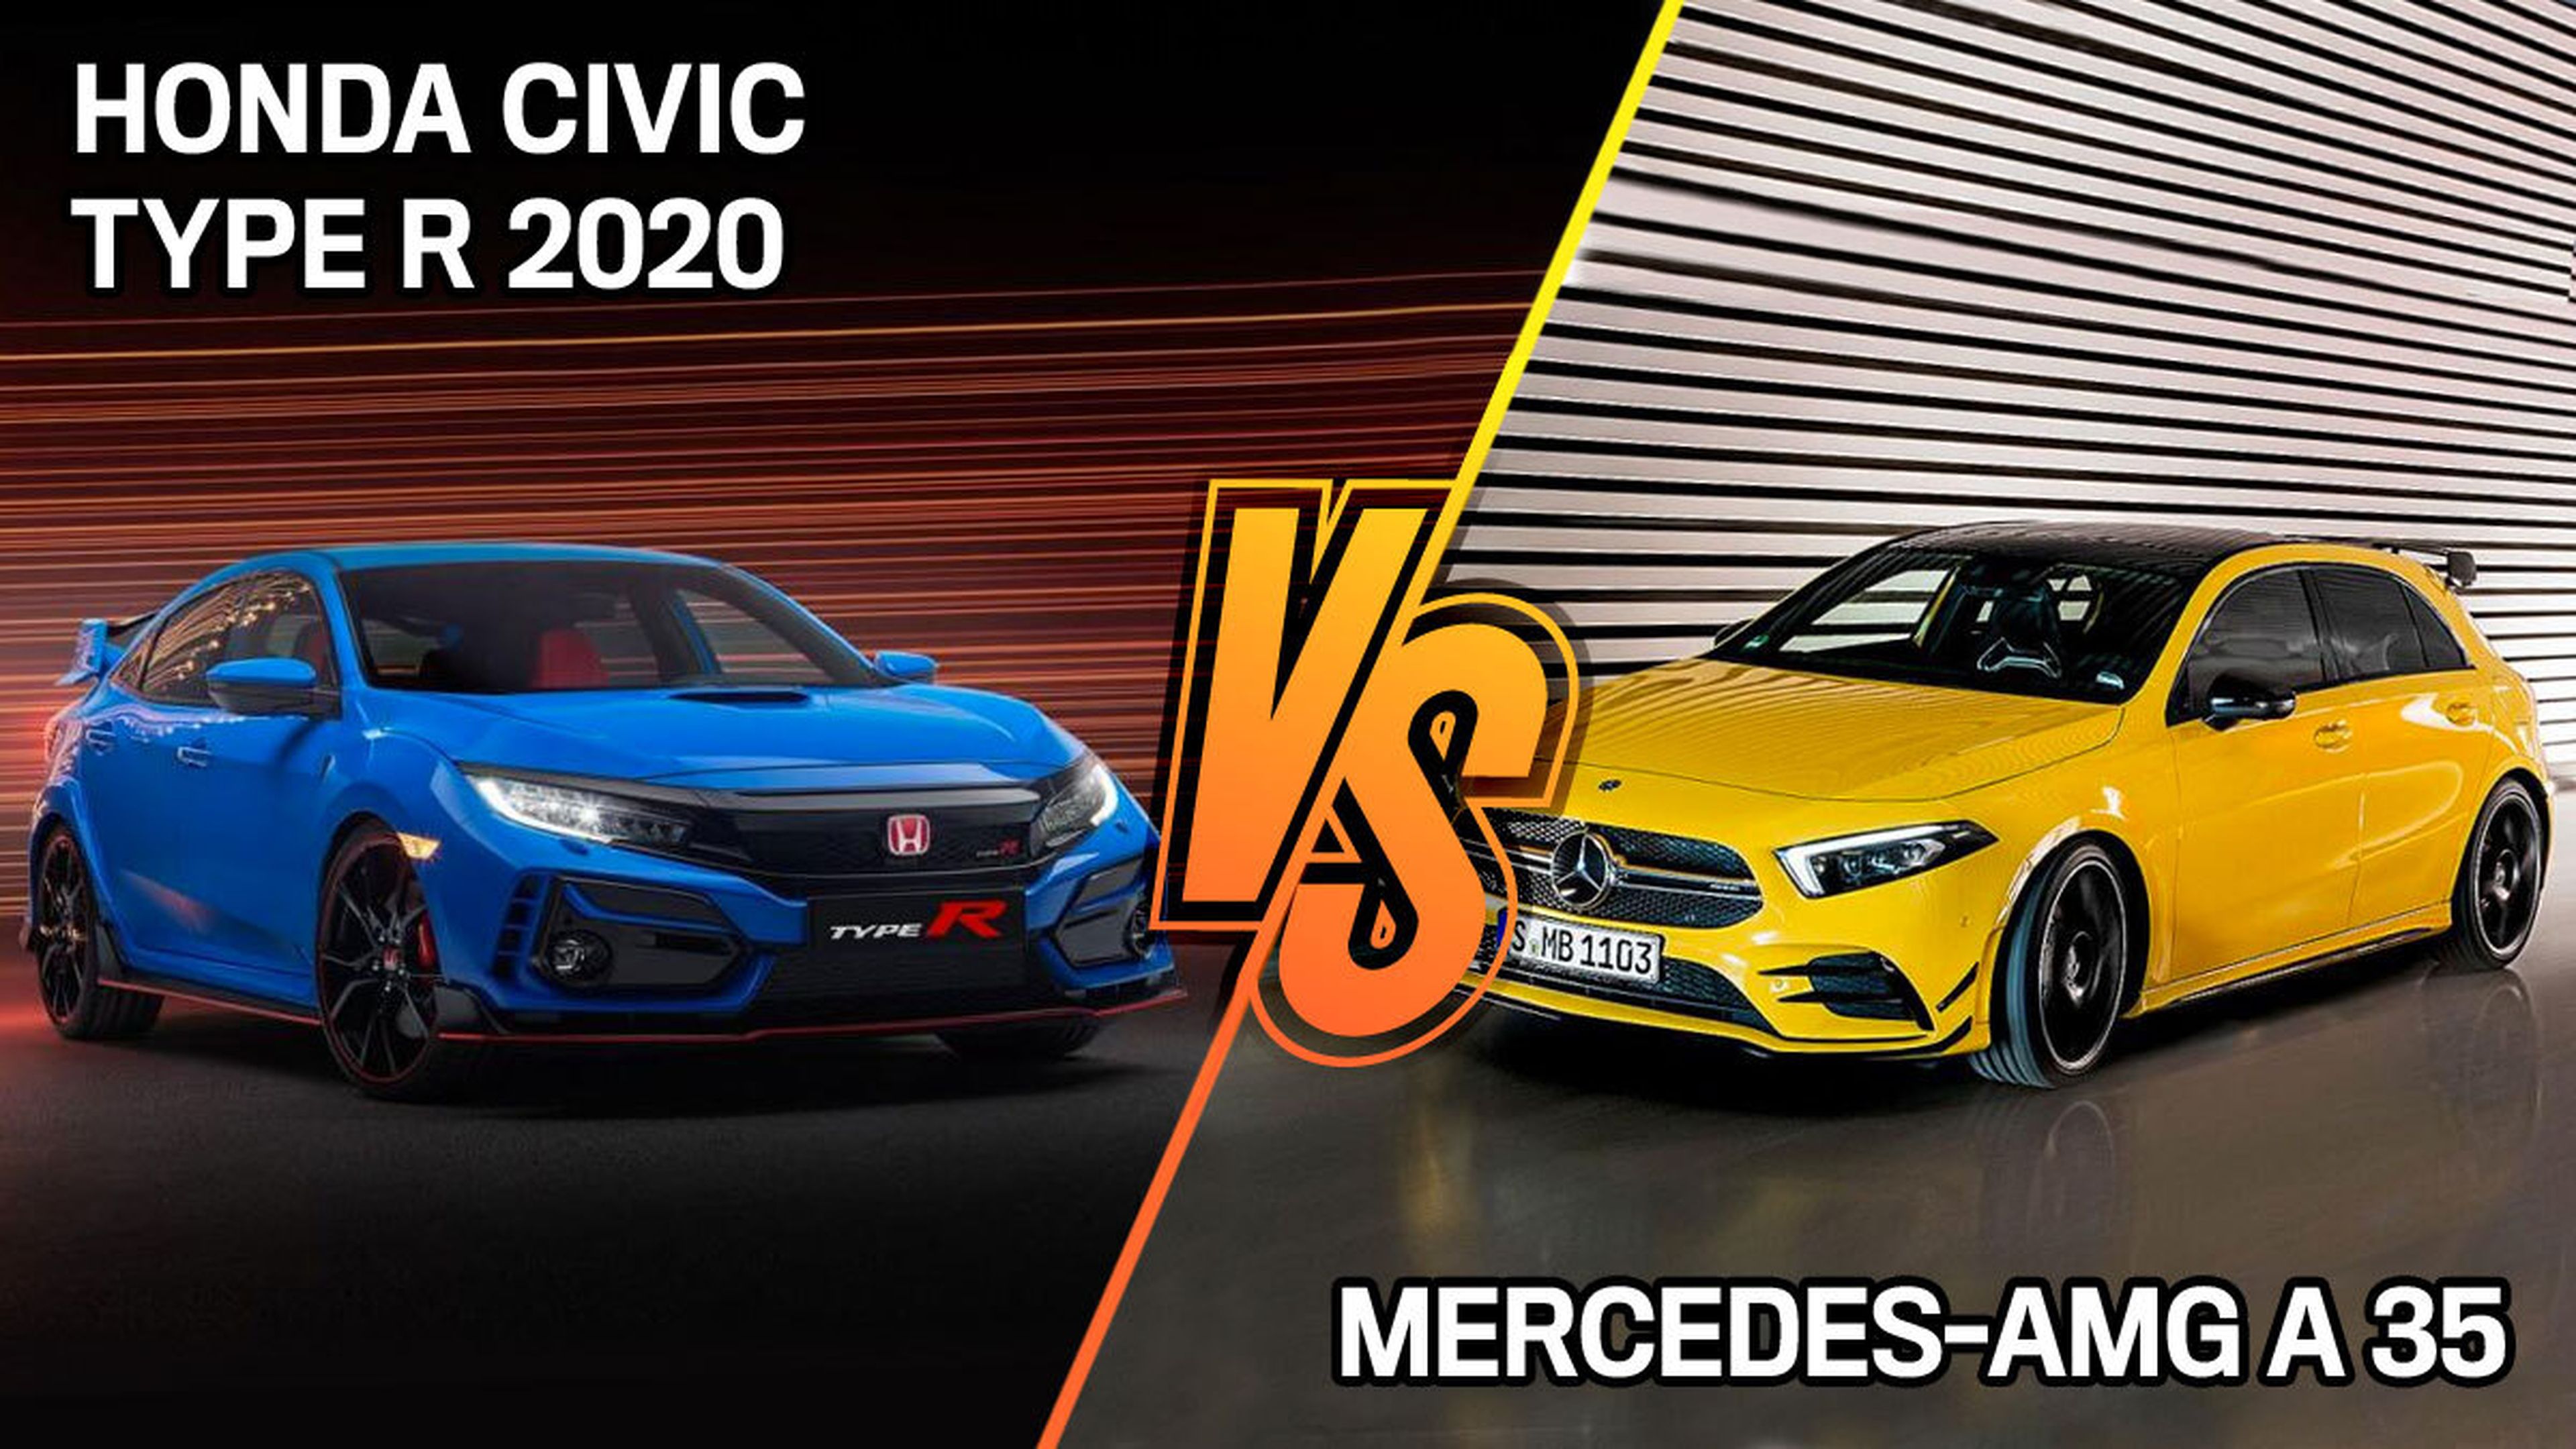 Honda Civic Type R 2020 o Mercedes-AMG A 35 ¿cuál es mejor?